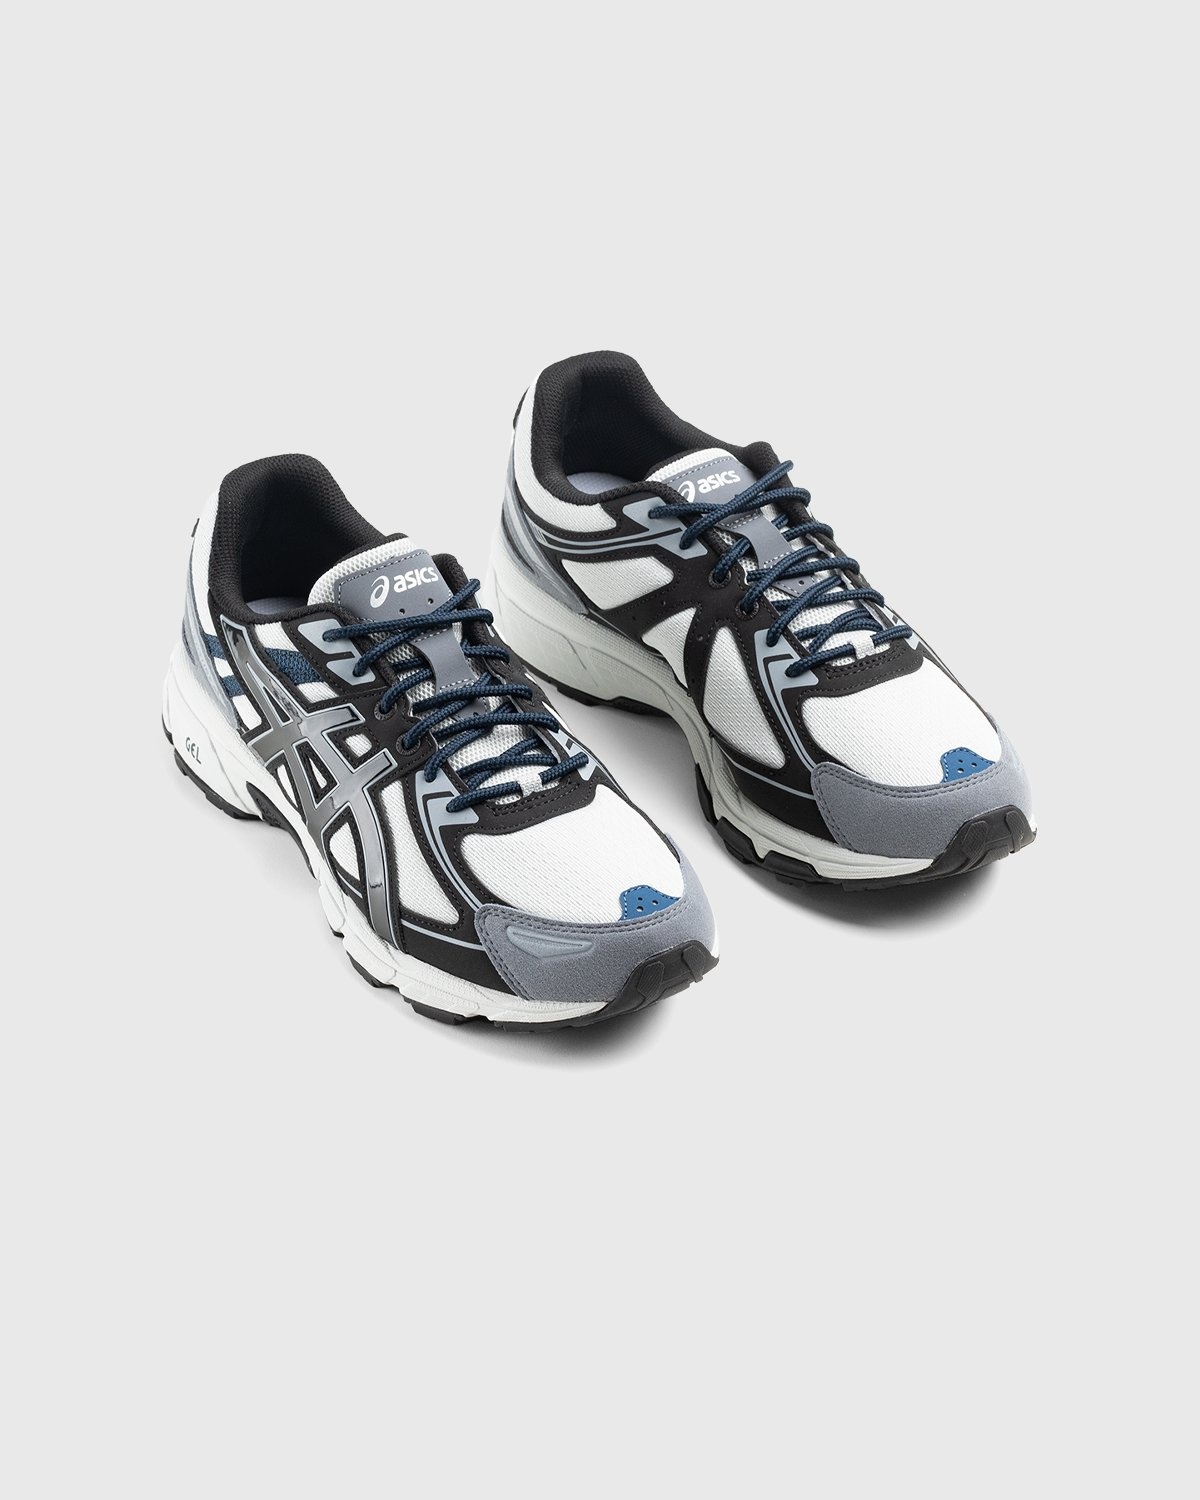 asics – Gel-Venture 6 Glacier Grey Black - Low Top Sneakers - Grey - Image 3